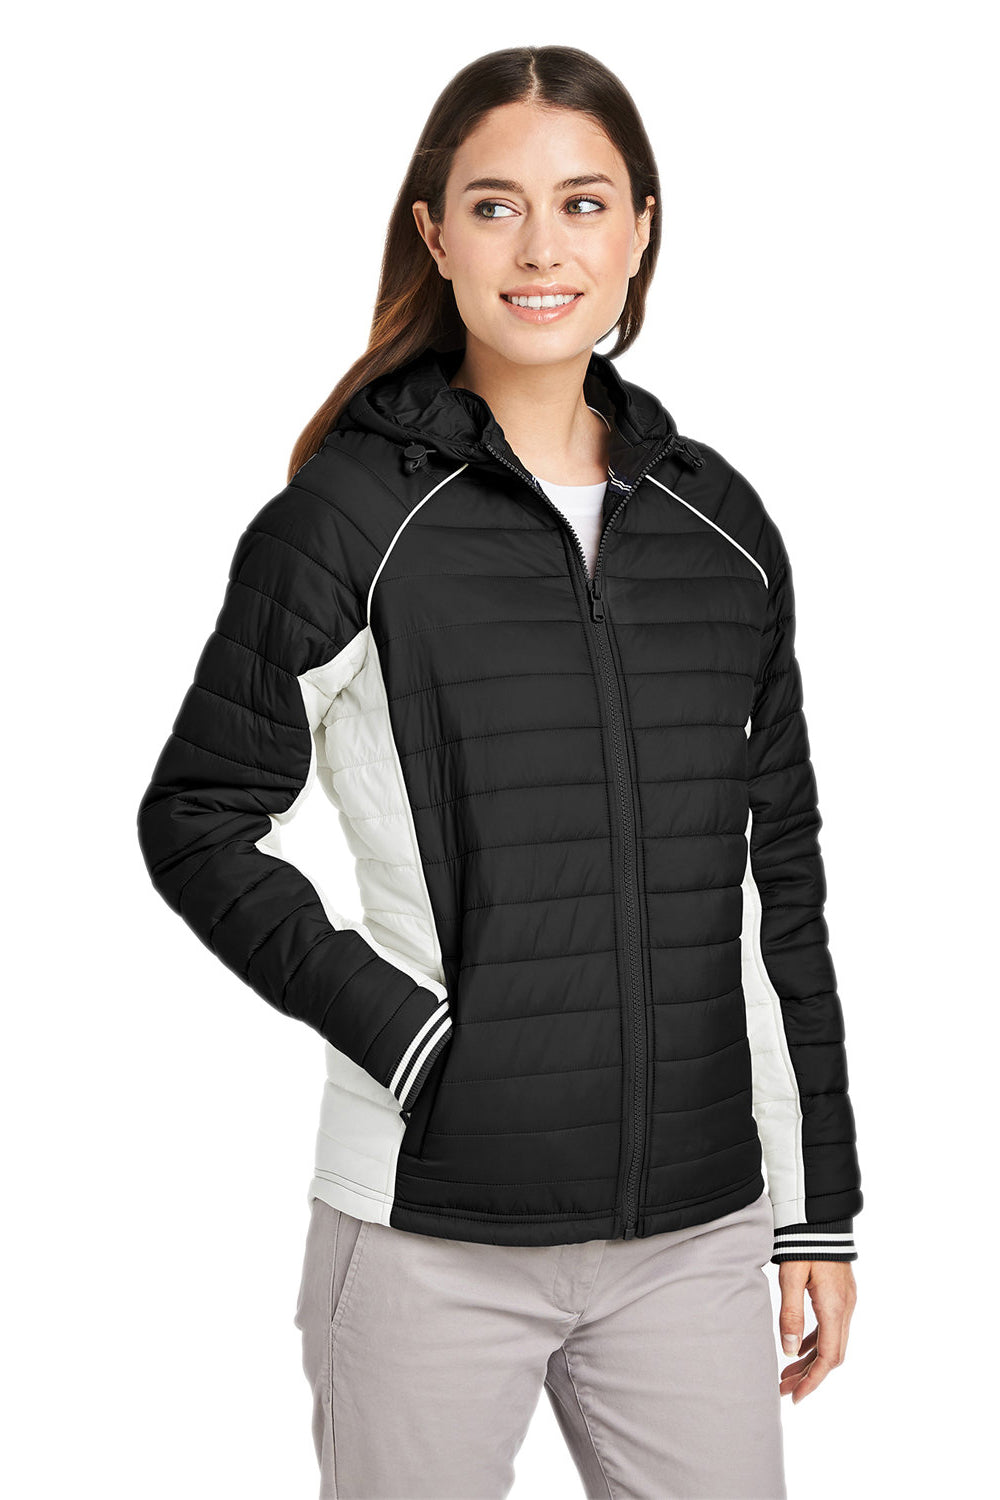 Nautica N17187 Womens Nautical Mile Packable Full Zip Hooded Puffer Jacket Black/Antique White 3Q